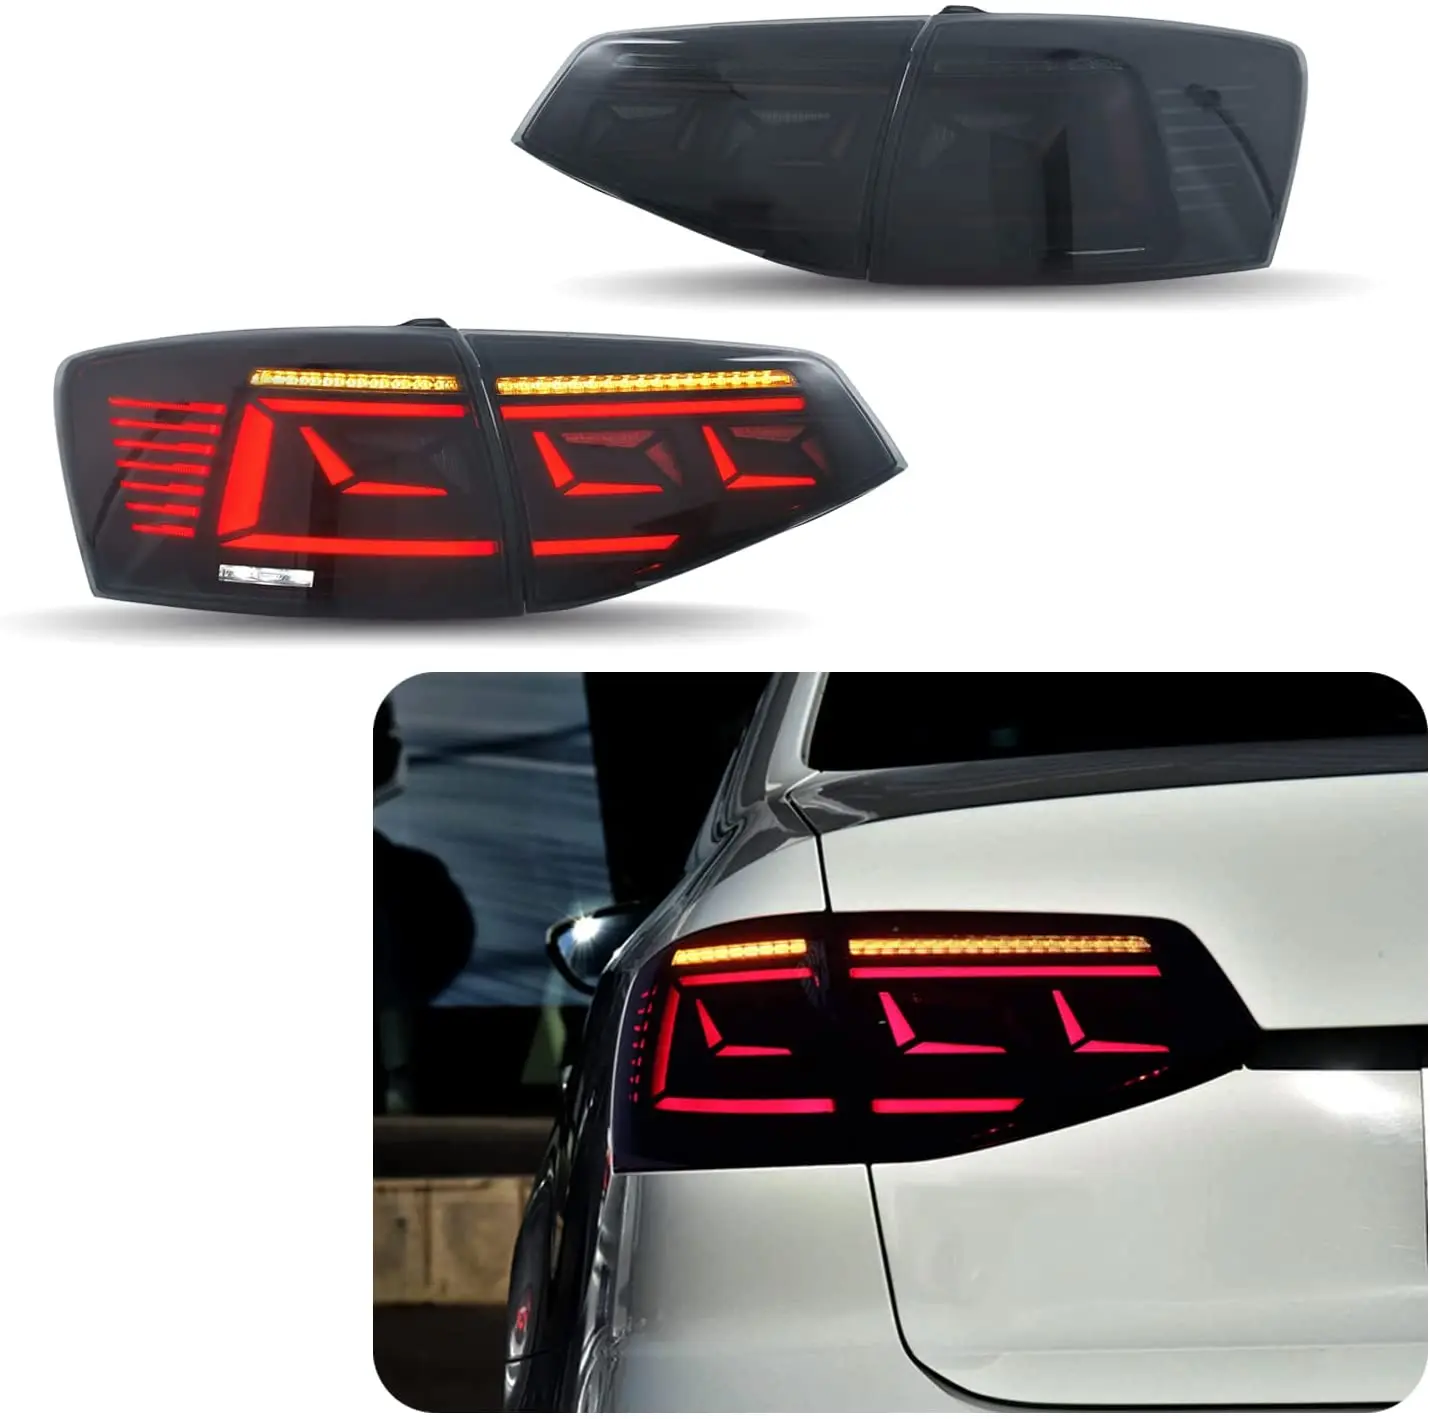 Luces traseras LED para coche, accesorio con indicador secuencial, montaje de lámpara trasera, para VW, Volkswagen, Jetta, 2015, 2016, 2017, 2018